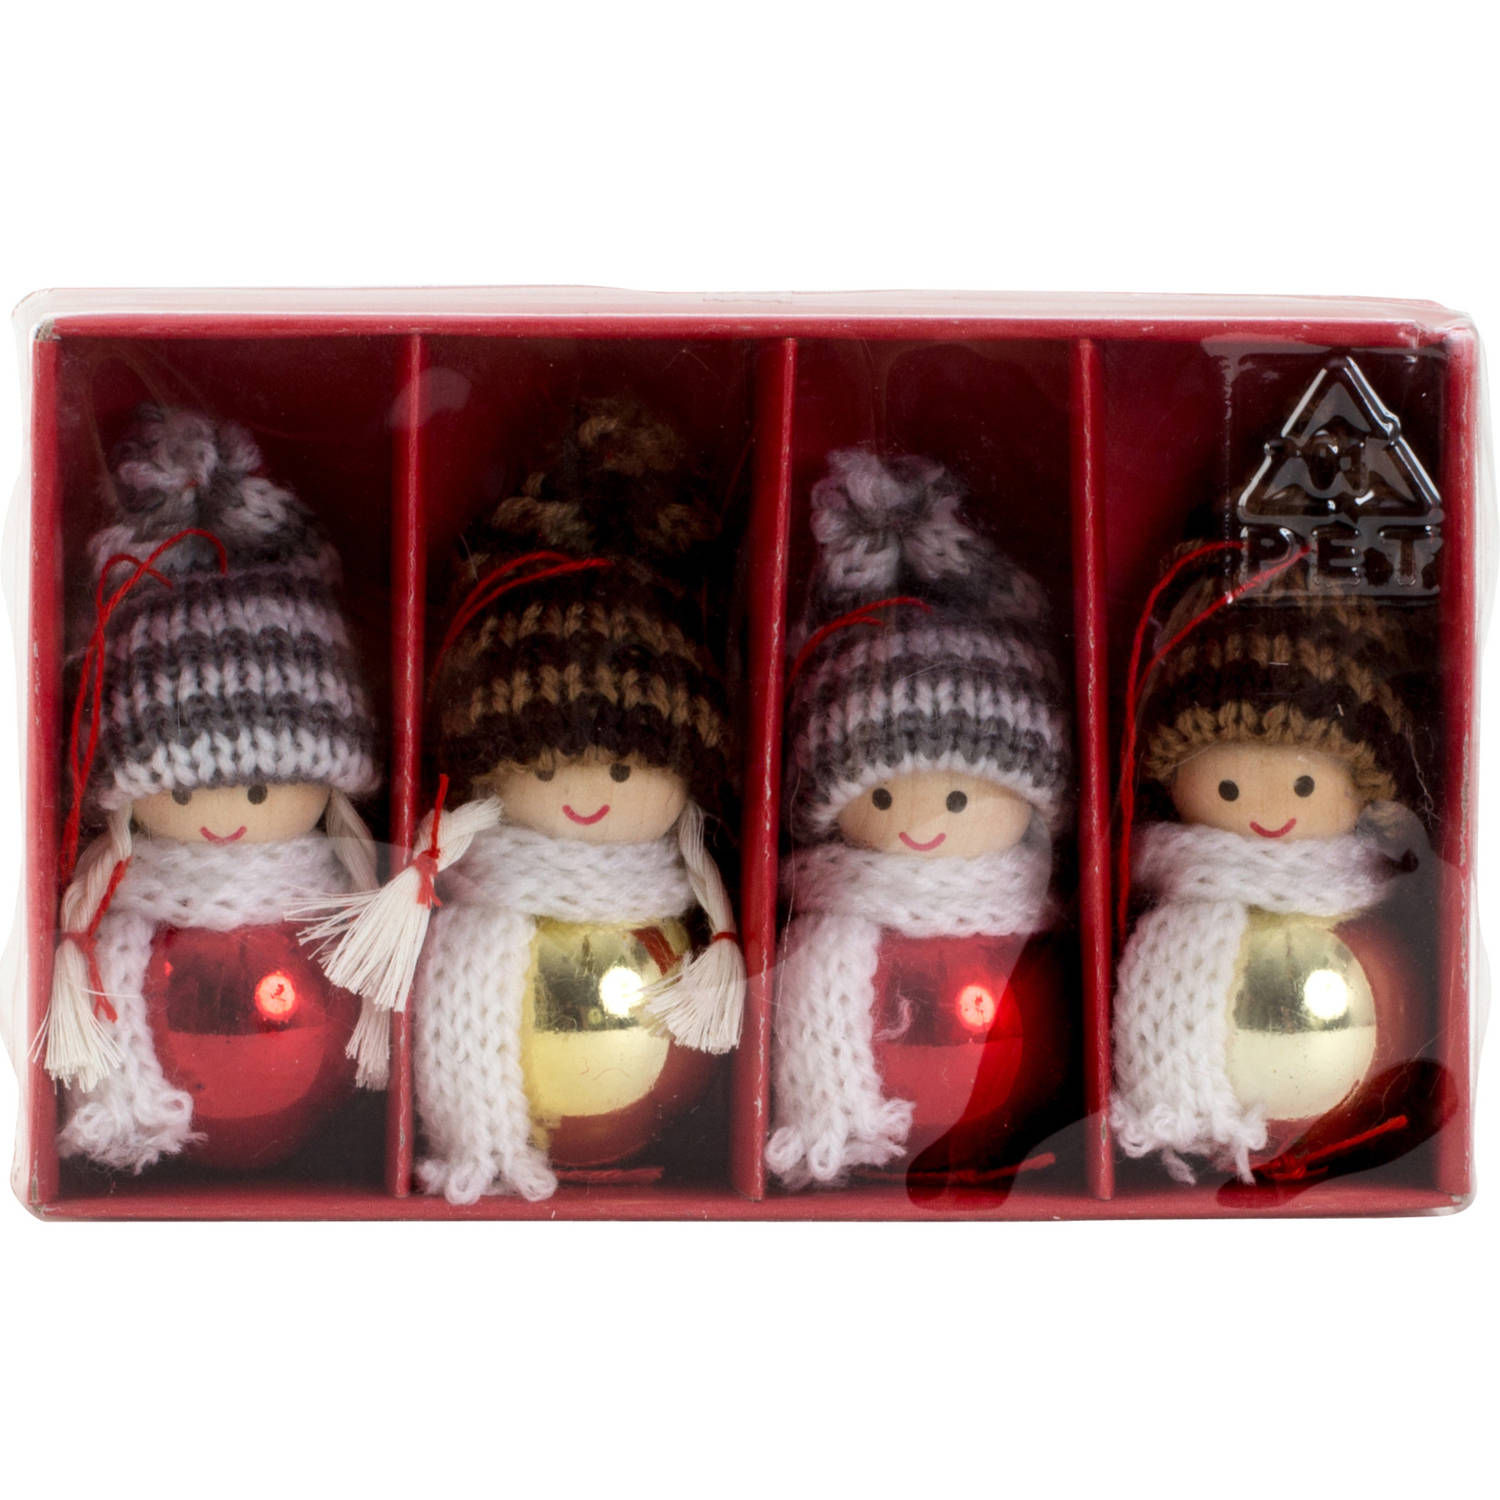 IKO kersthangers-kerstballen -poppetjes- gekleurd 4x hout Kersthangers